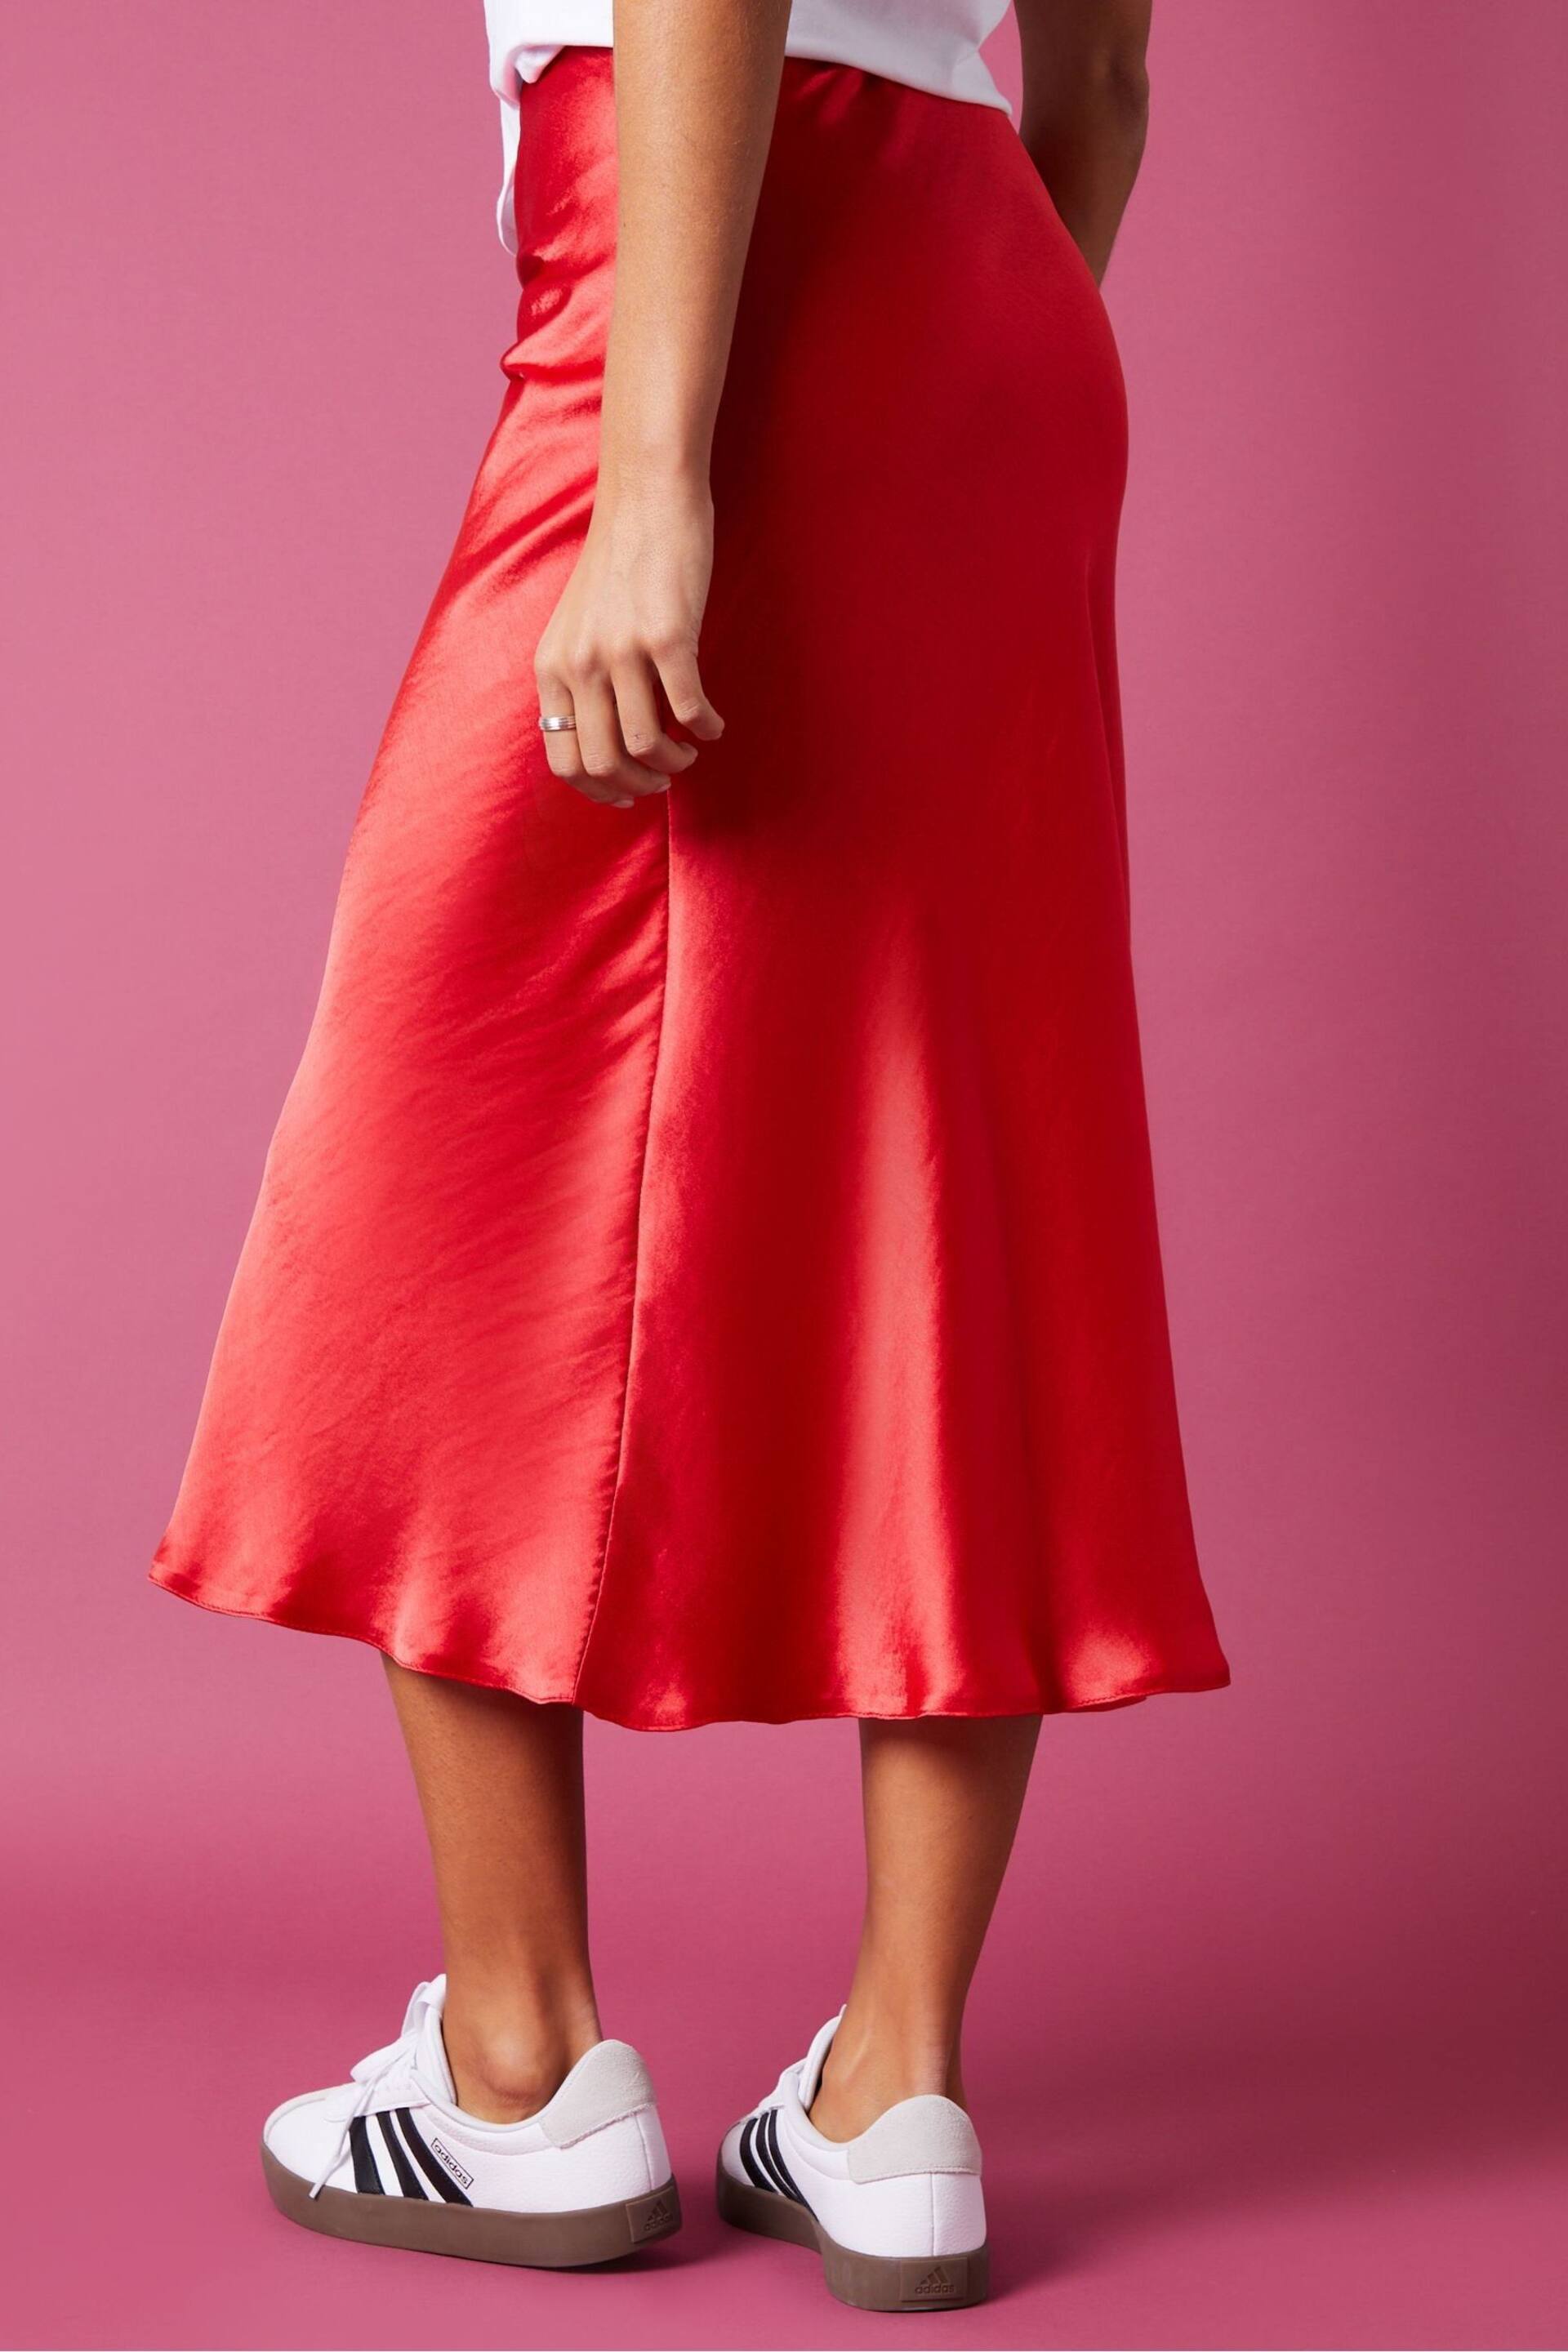 Threadbare Red Satin Midi Skirt - Image 2 of 5